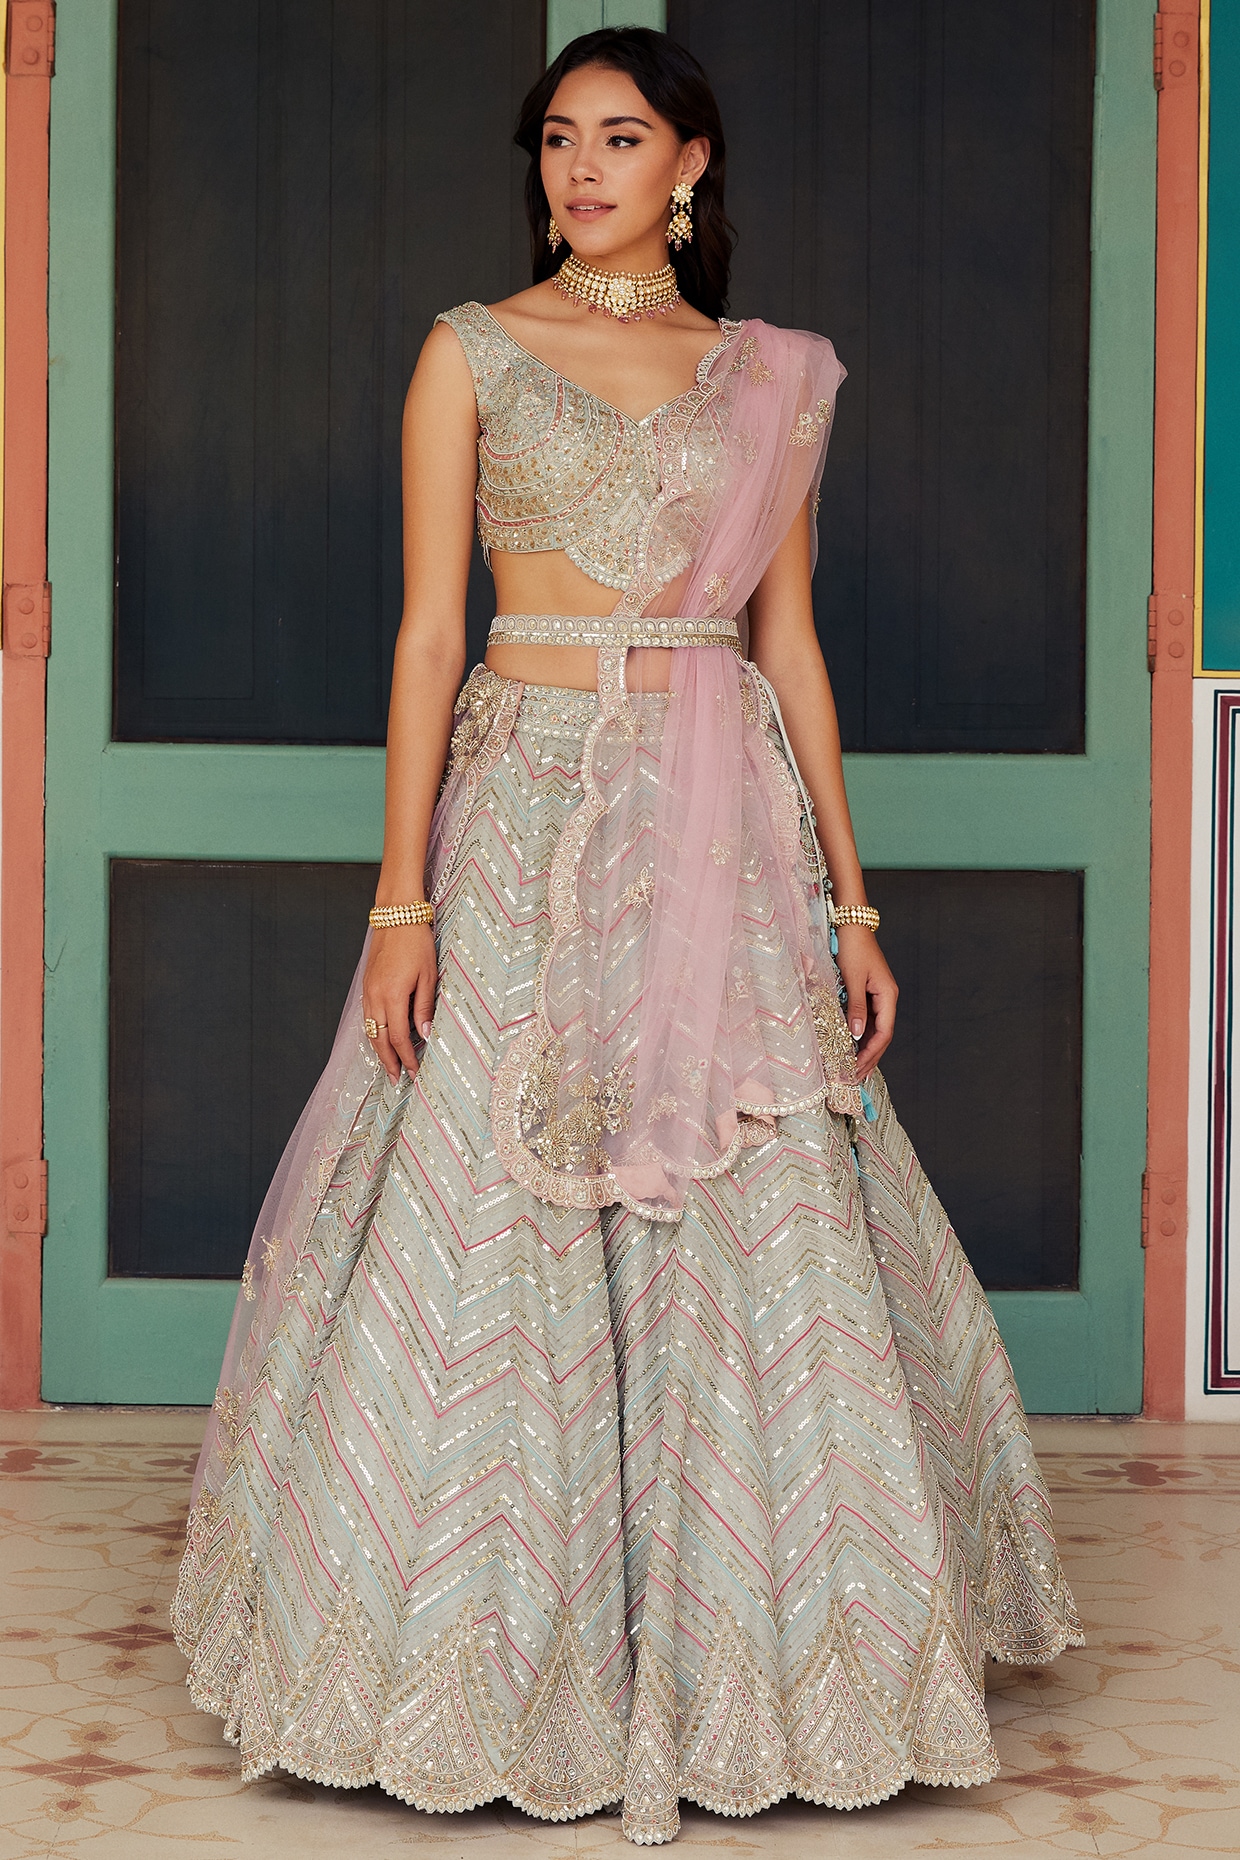 New) Raksha Bandhan Special Dress For Girls Teens 2021 [46+ SOLD]